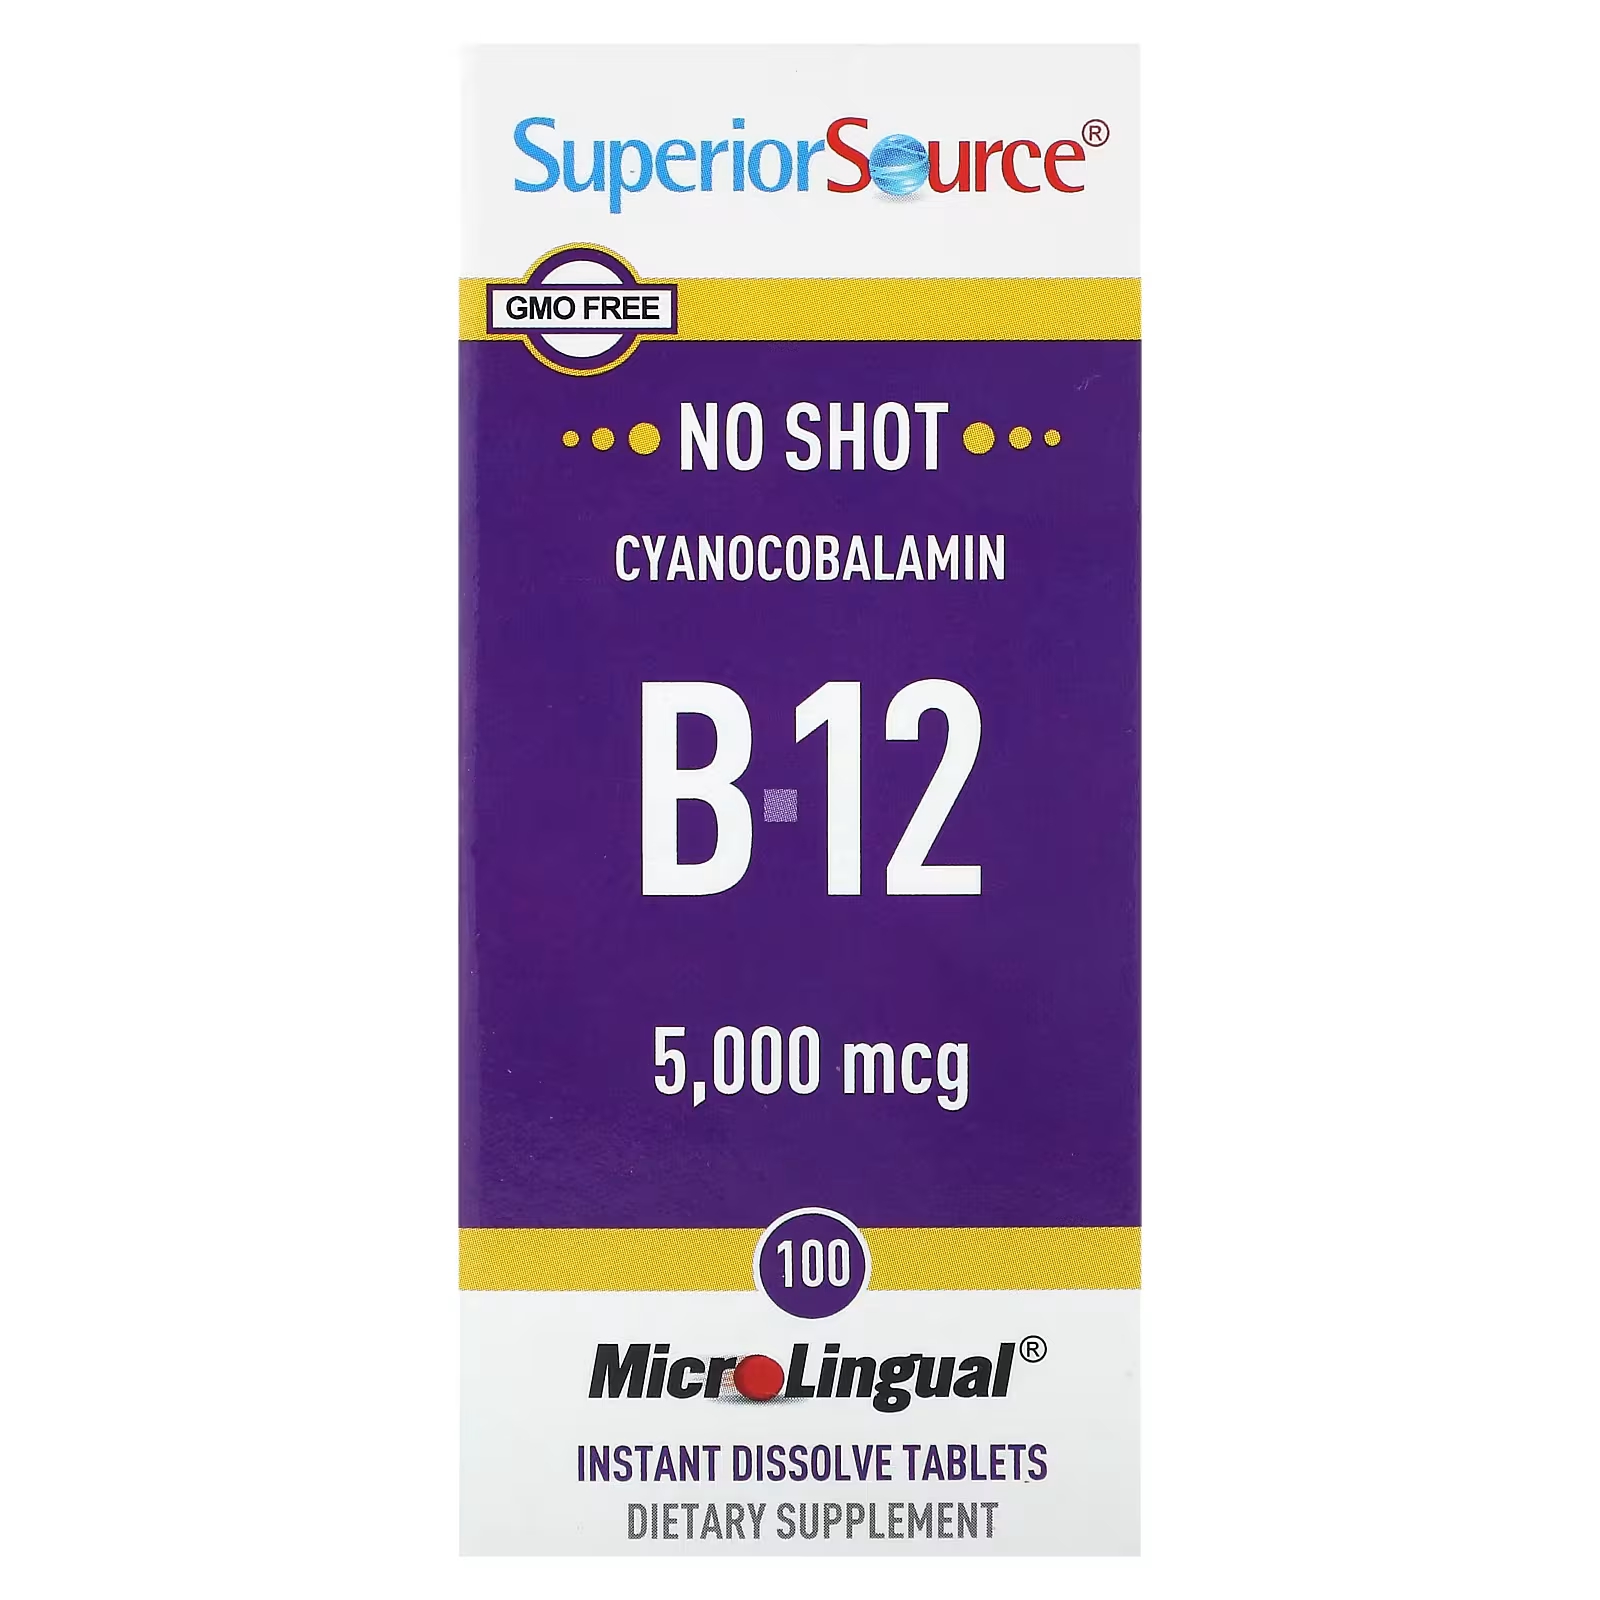 Пищевая добавка MicroLingual Superior Source B-12 цианокобаламин, 100 растворяющихся таблеток метилкобаламин b 12 superior source 90 растворяющихся таблеток